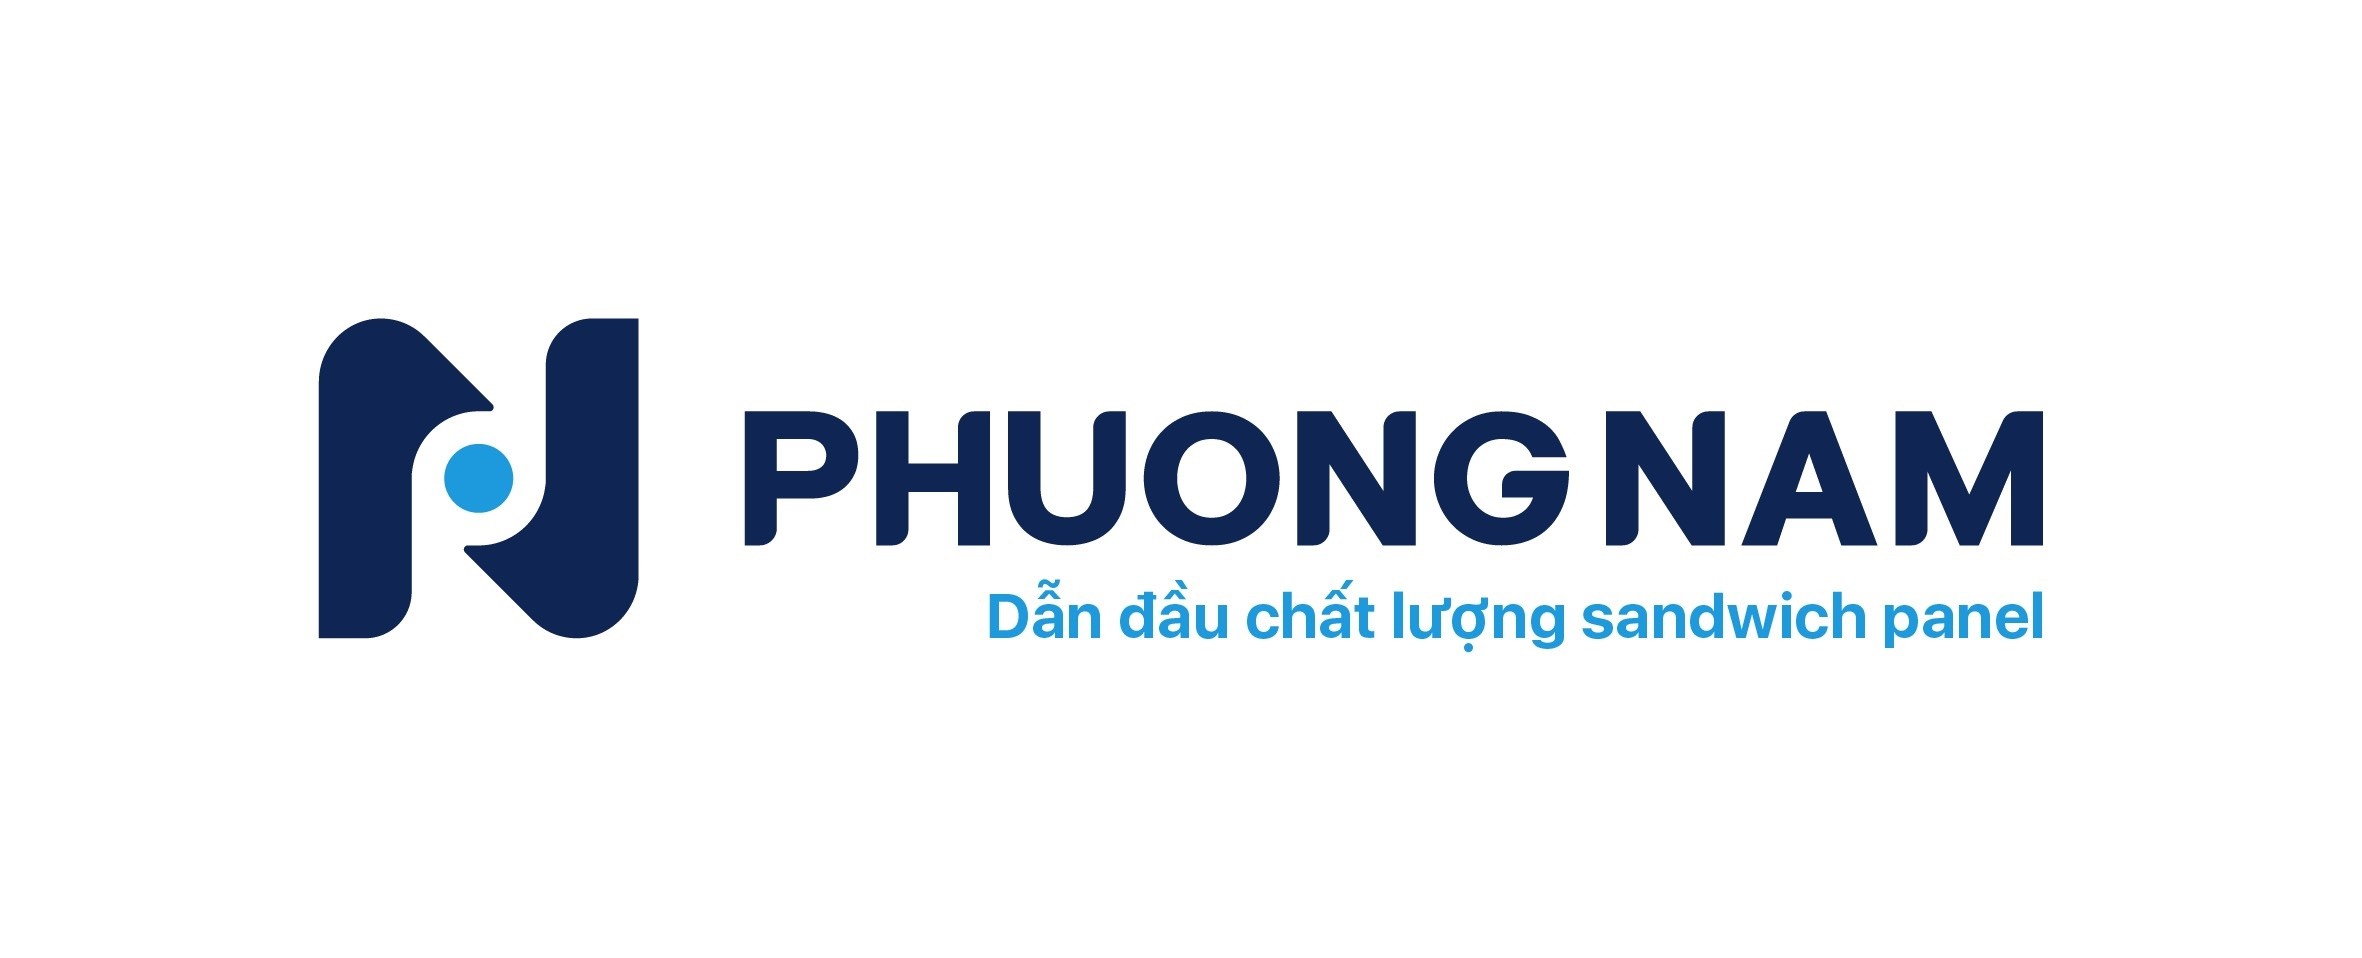 Cong ty cach am cach nhiet Phuong Nam no luc cho vat lieu xanh-Hinh-6